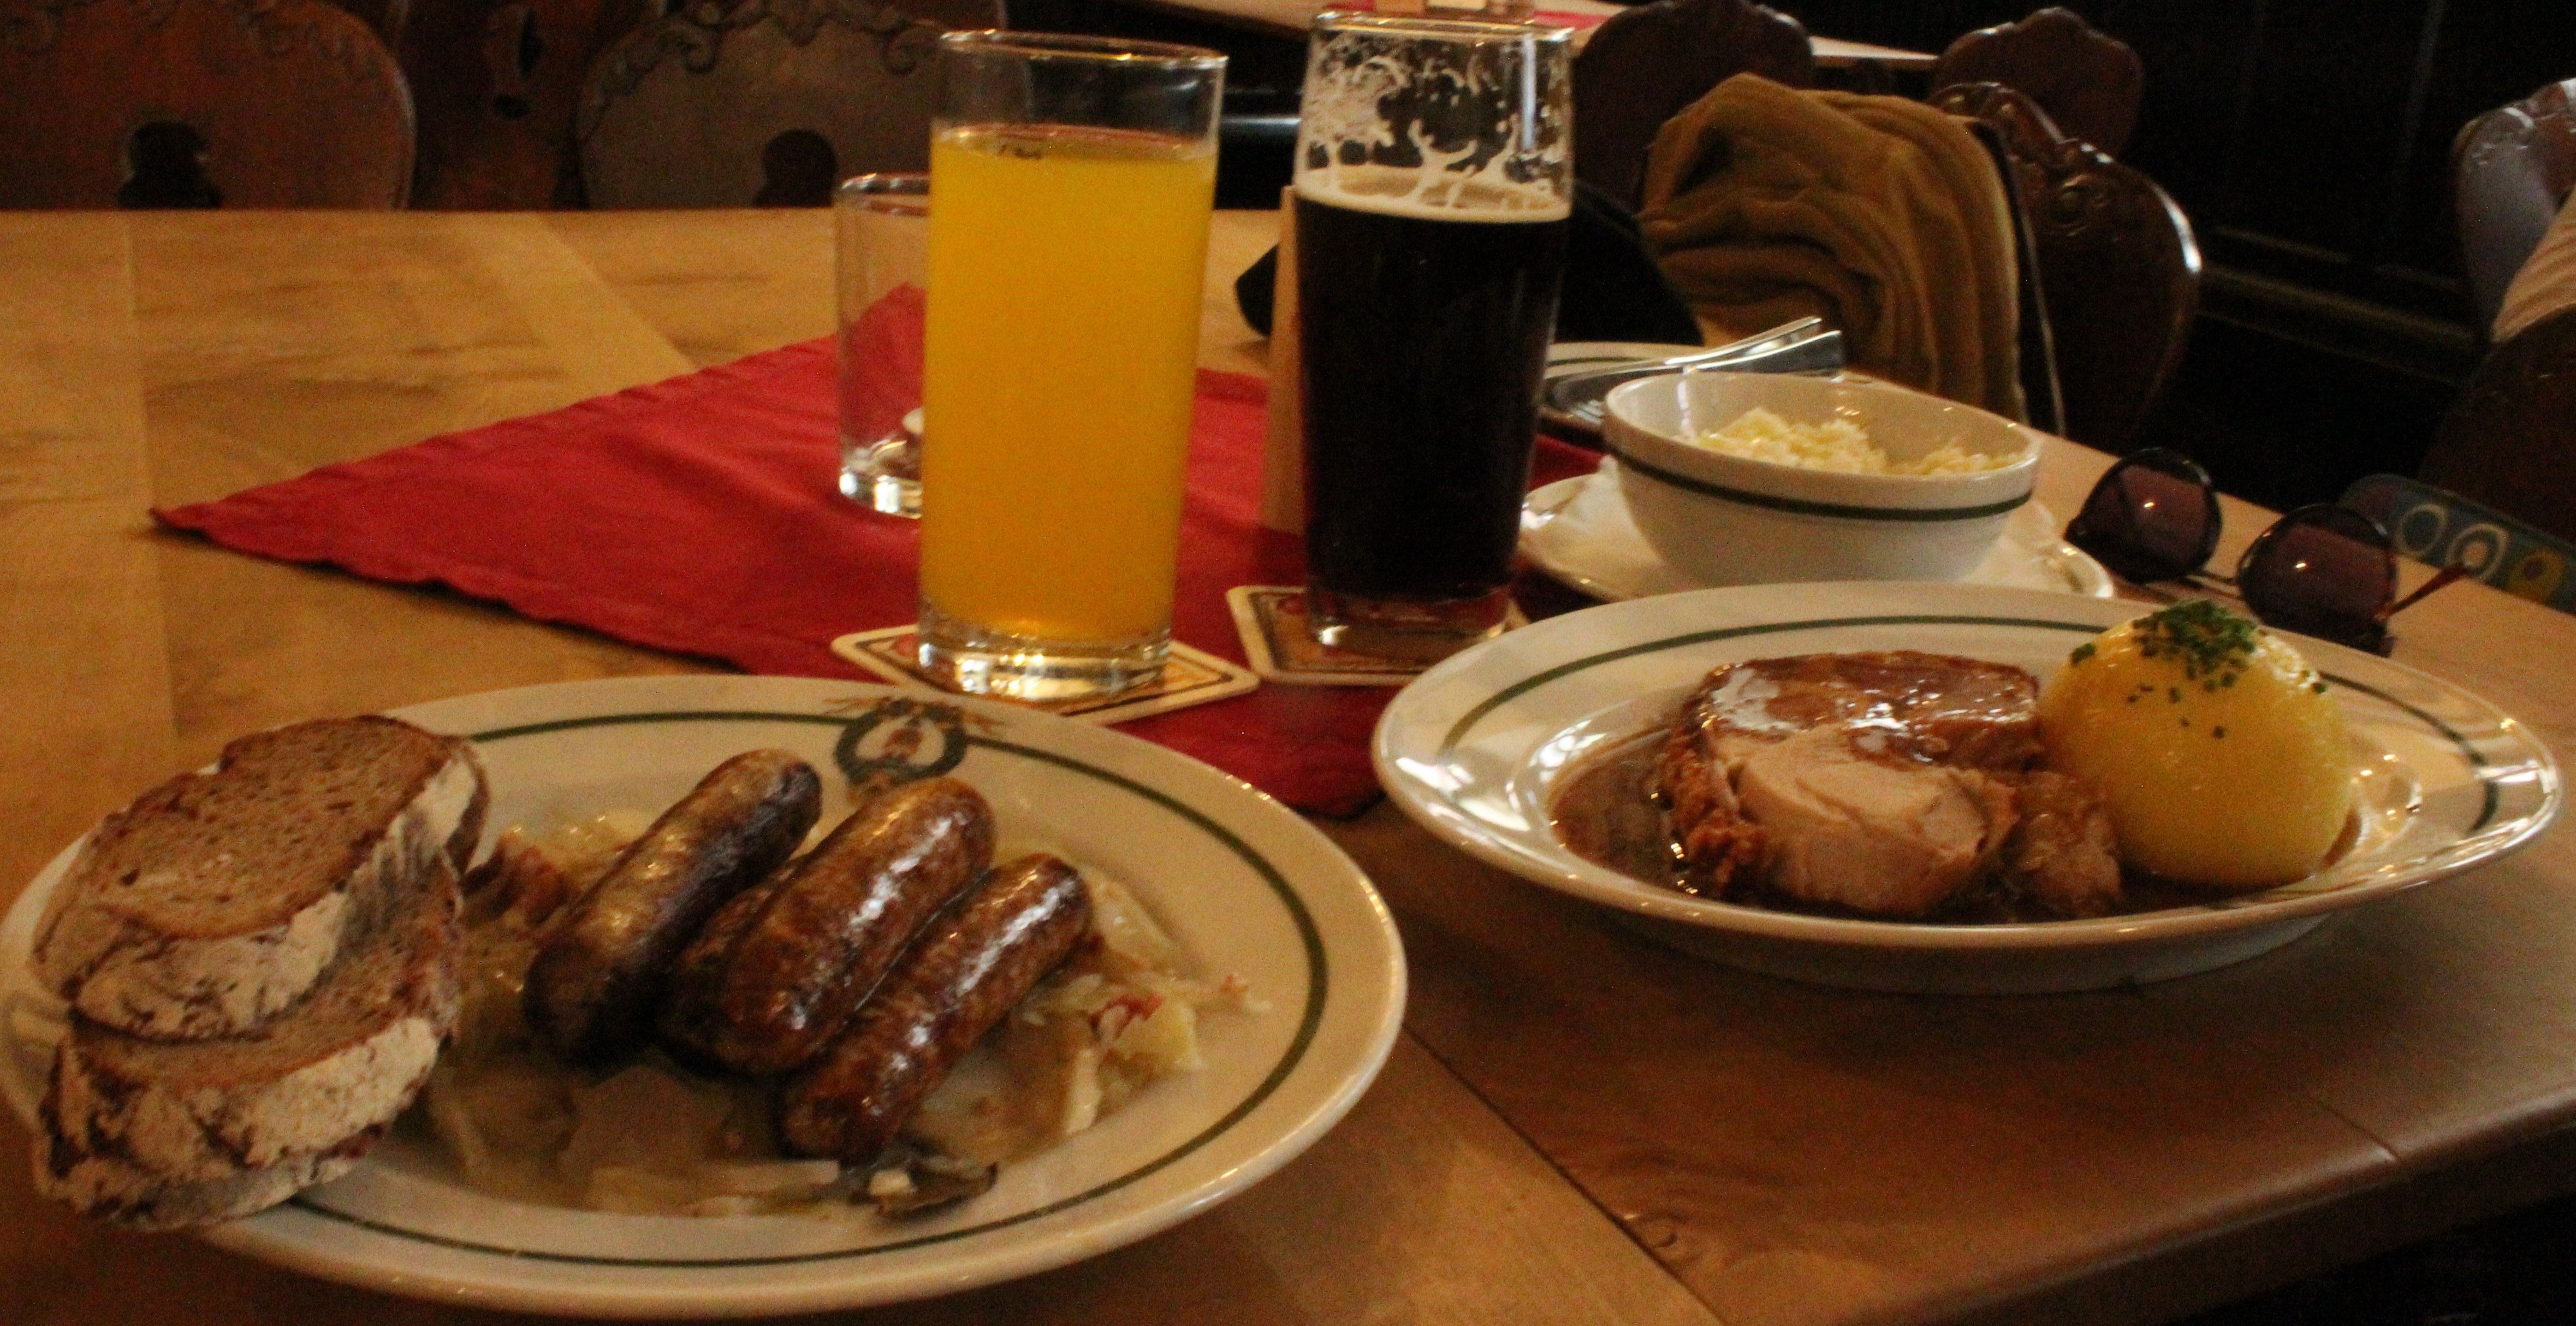 Bamberg style sausages with sauerkraut & bread and kesselfleisch